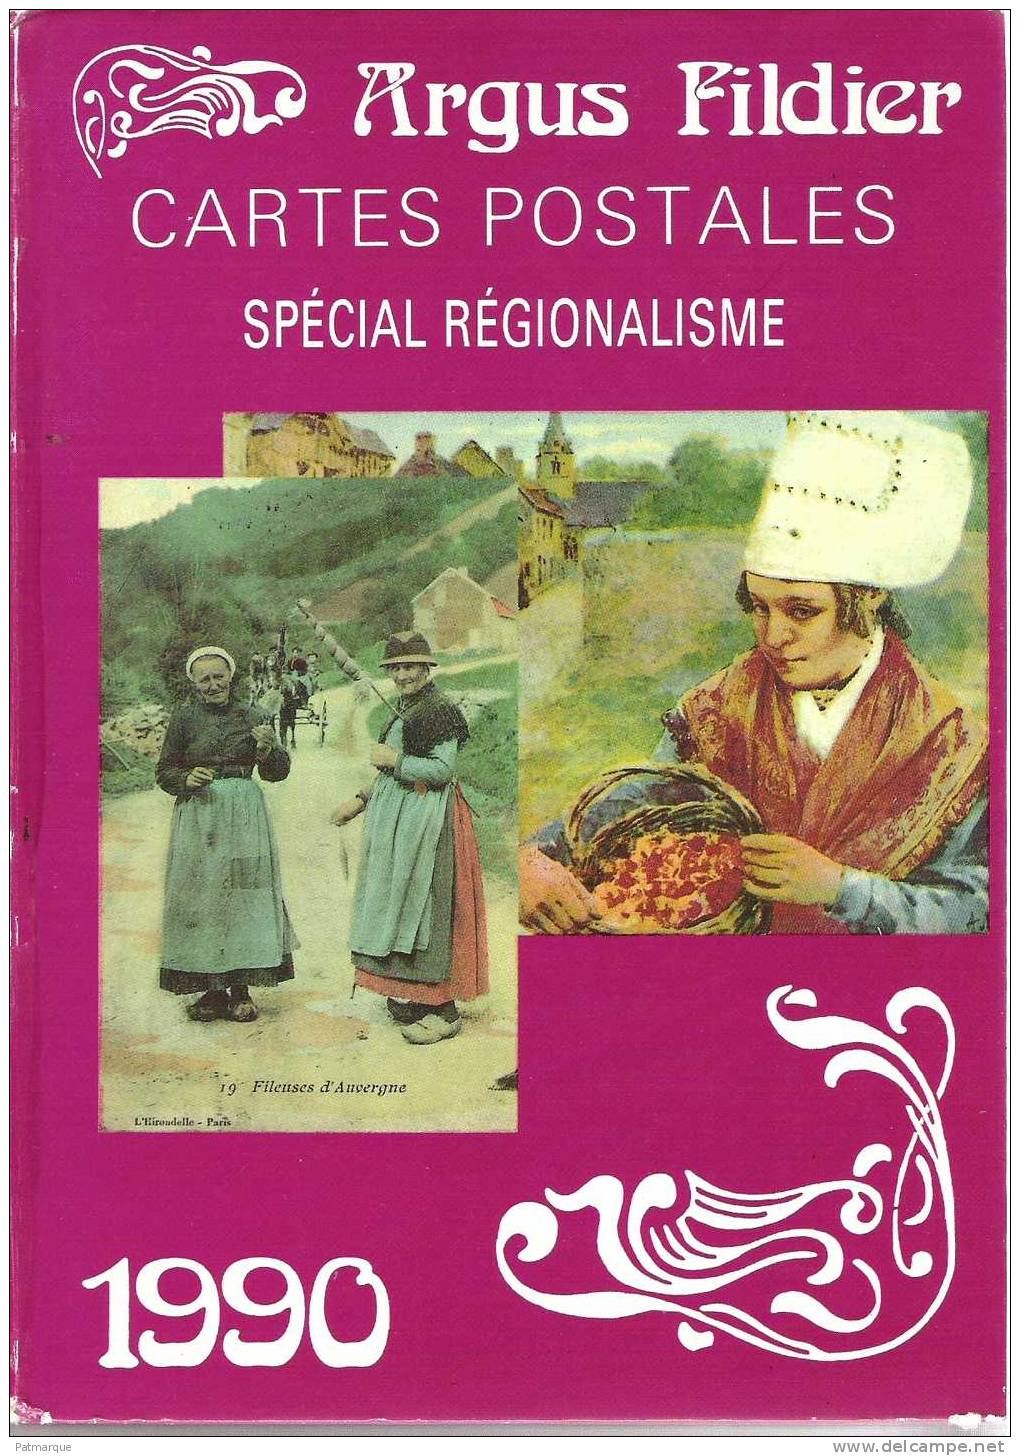 LOT DE 3 ARGUS FILDIER 1985 - 1988 Et 1990 - CATALOGUE DE CARTES POSTALES ANCIENNES DE COLLECTION - Libros & Catálogos